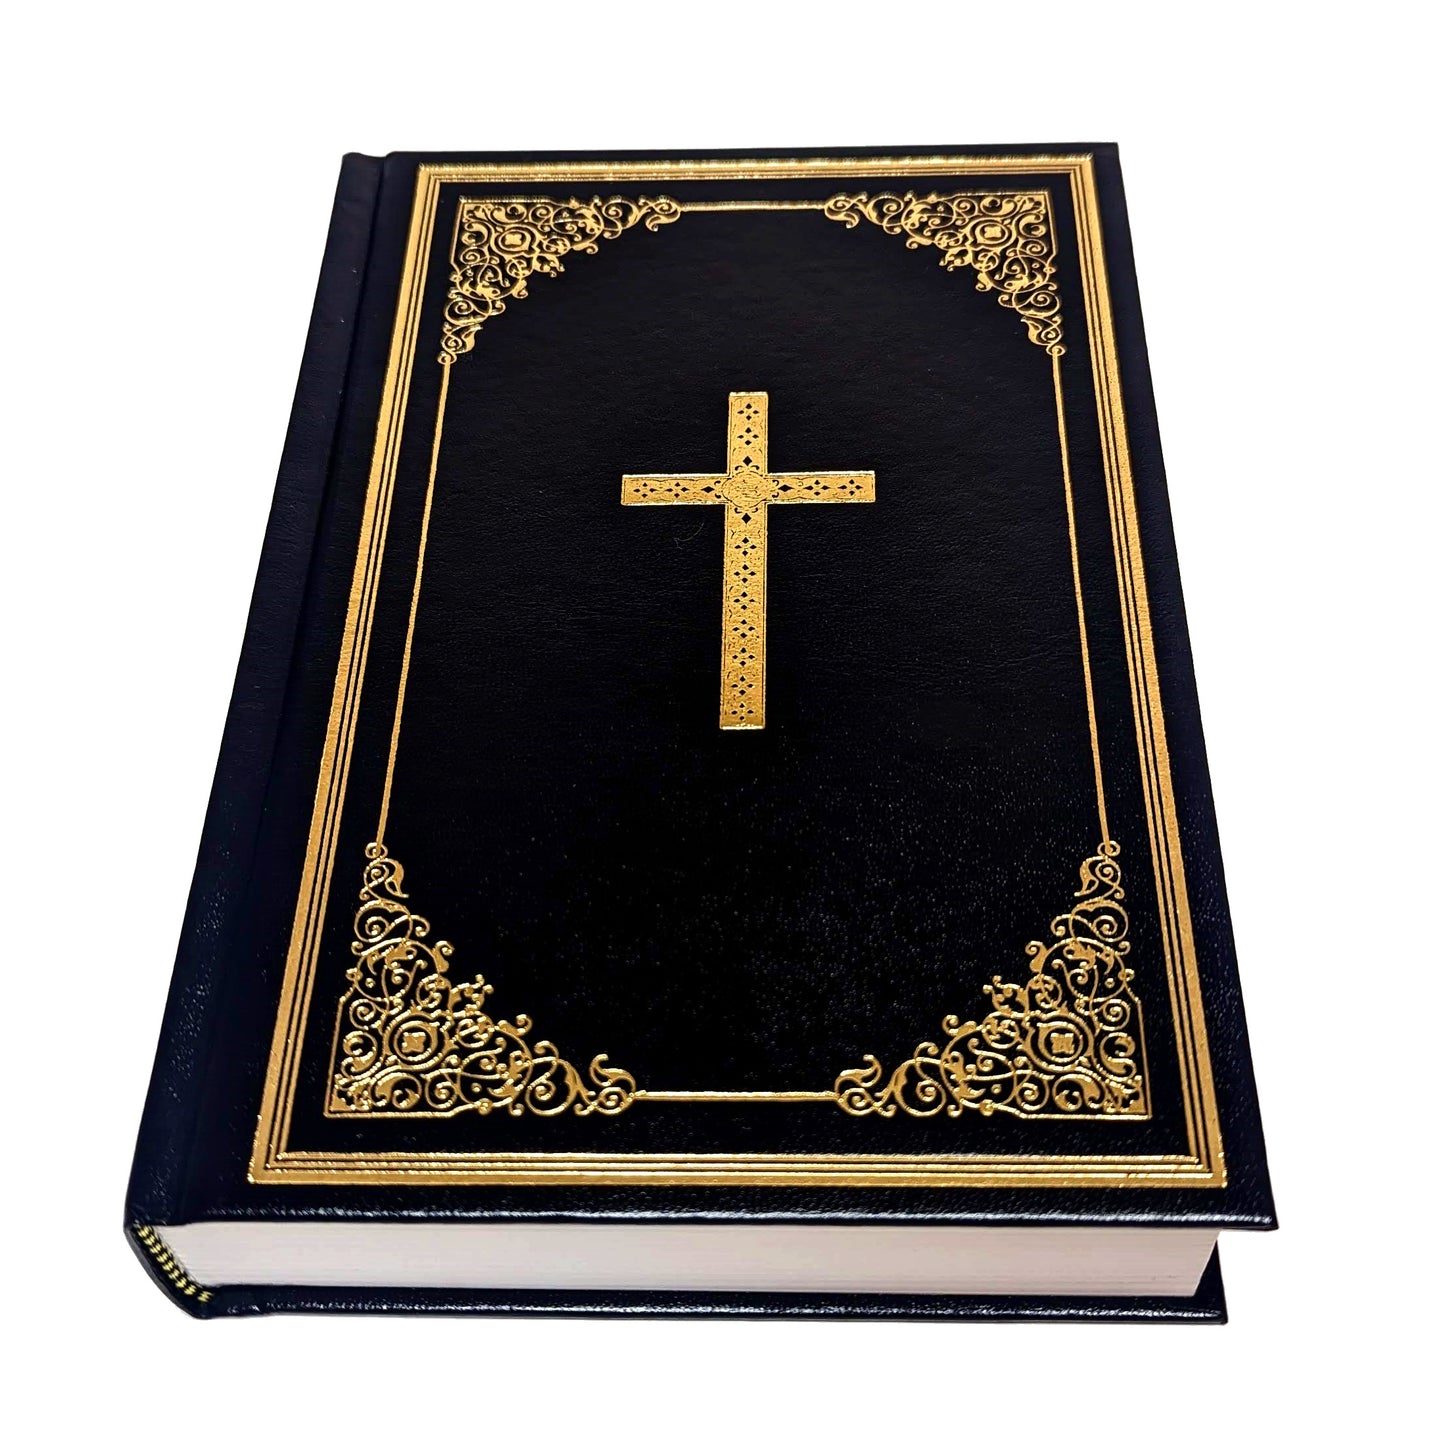 Douay-Rheims Bible Catholic Translation [Hard Cover]